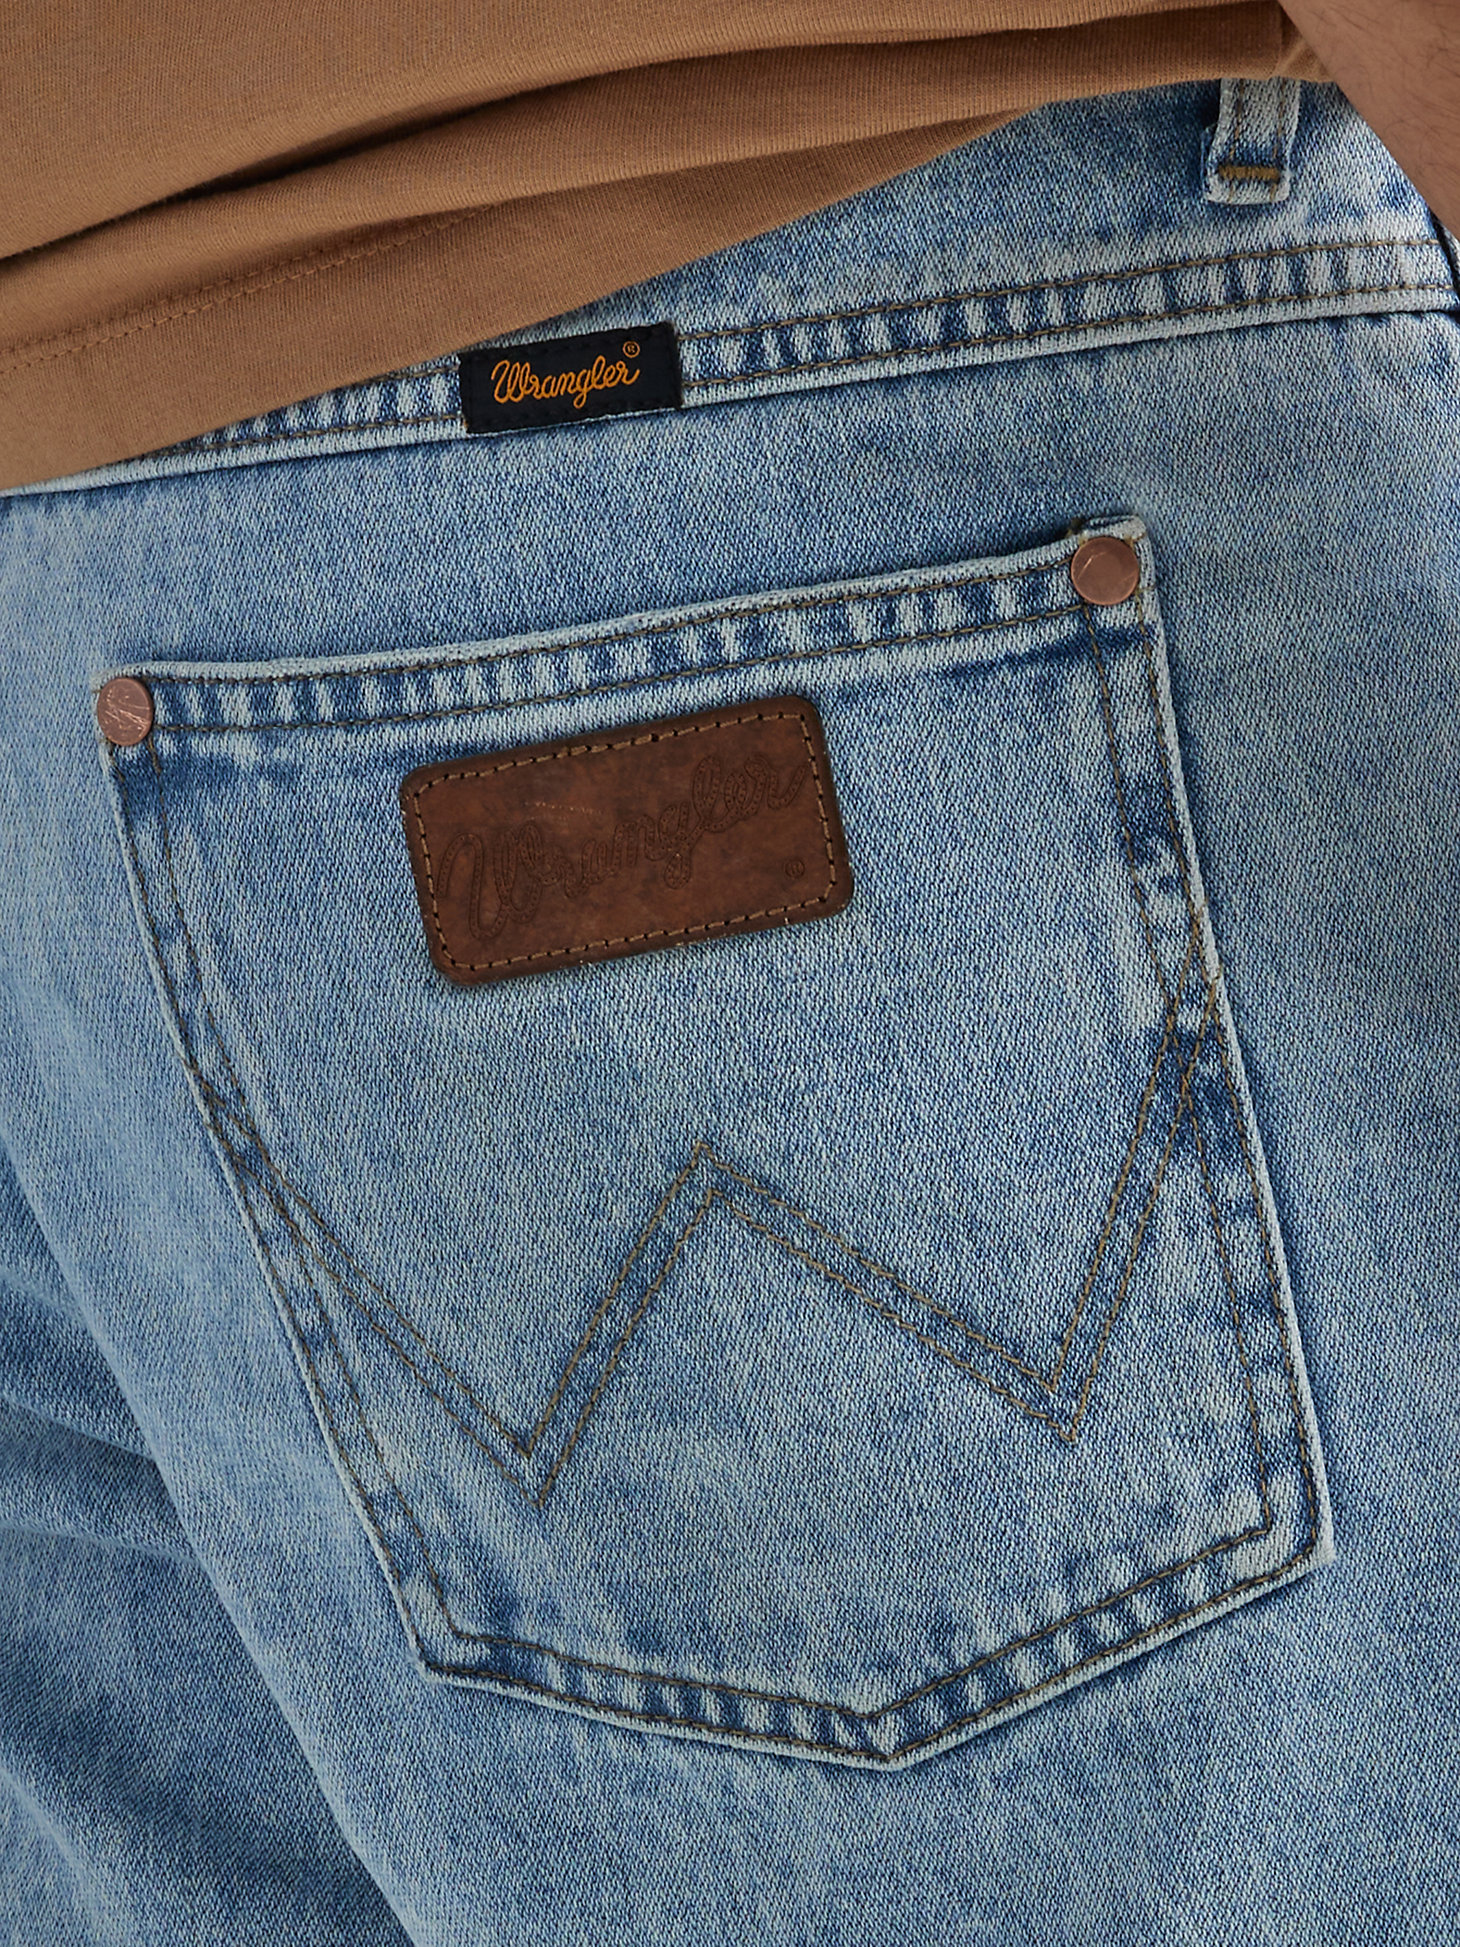 Men's Wrangler® Heritage Redding Loose Fit Jean in Ripped Light Wash alternative view 2